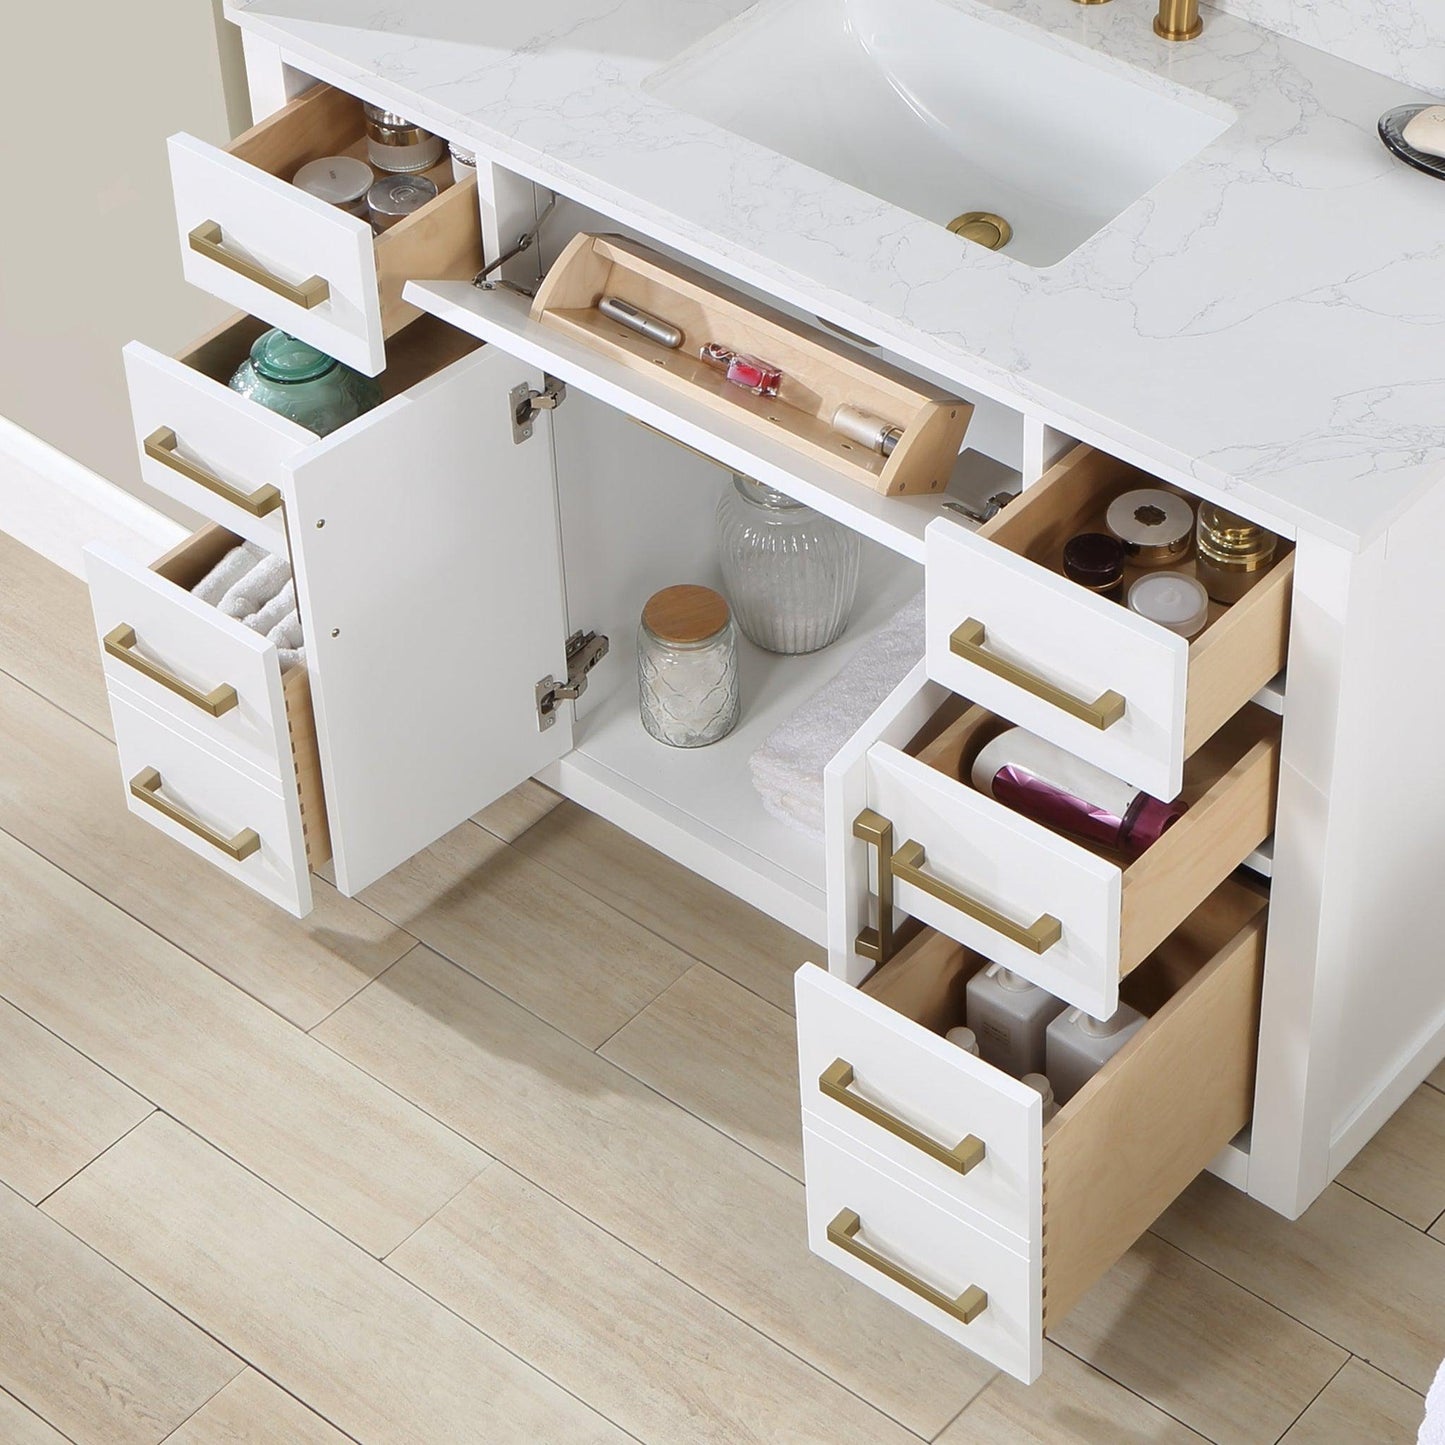 Altair Gavino 48" White Freestanding Single Bathroom Vanity Set With Grain White Composite Stone Top, Single Rectangular Undermount Ceramic Sink, Overflow, Sidesplash, and Backsplash